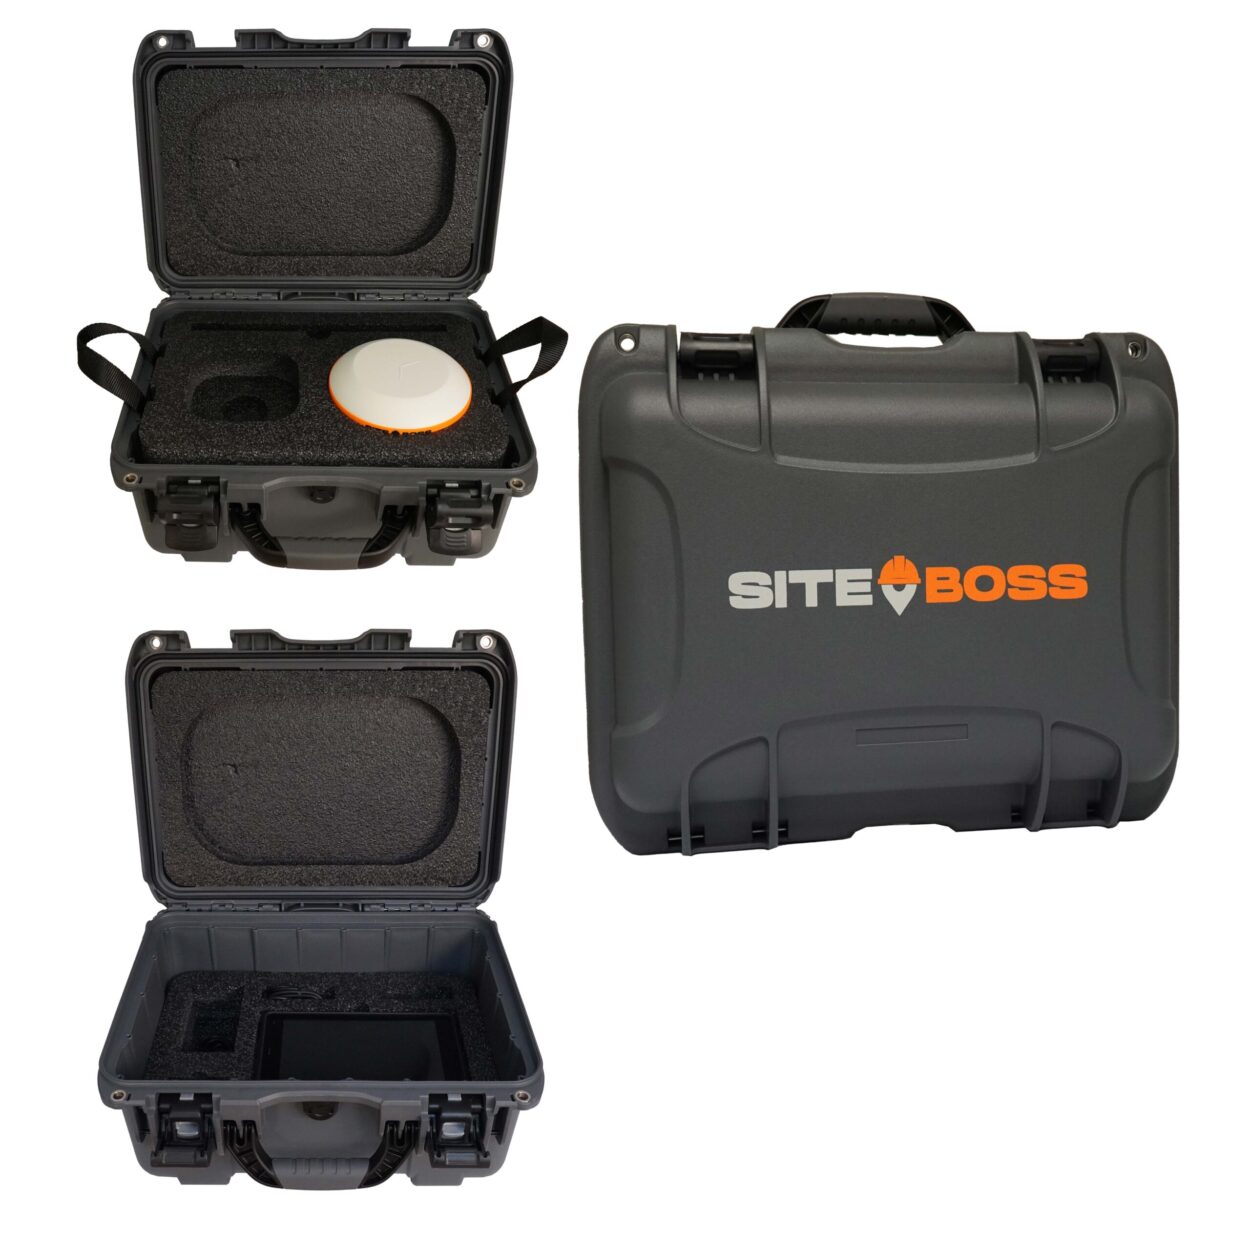 Siteboss Super 8in Rover Case